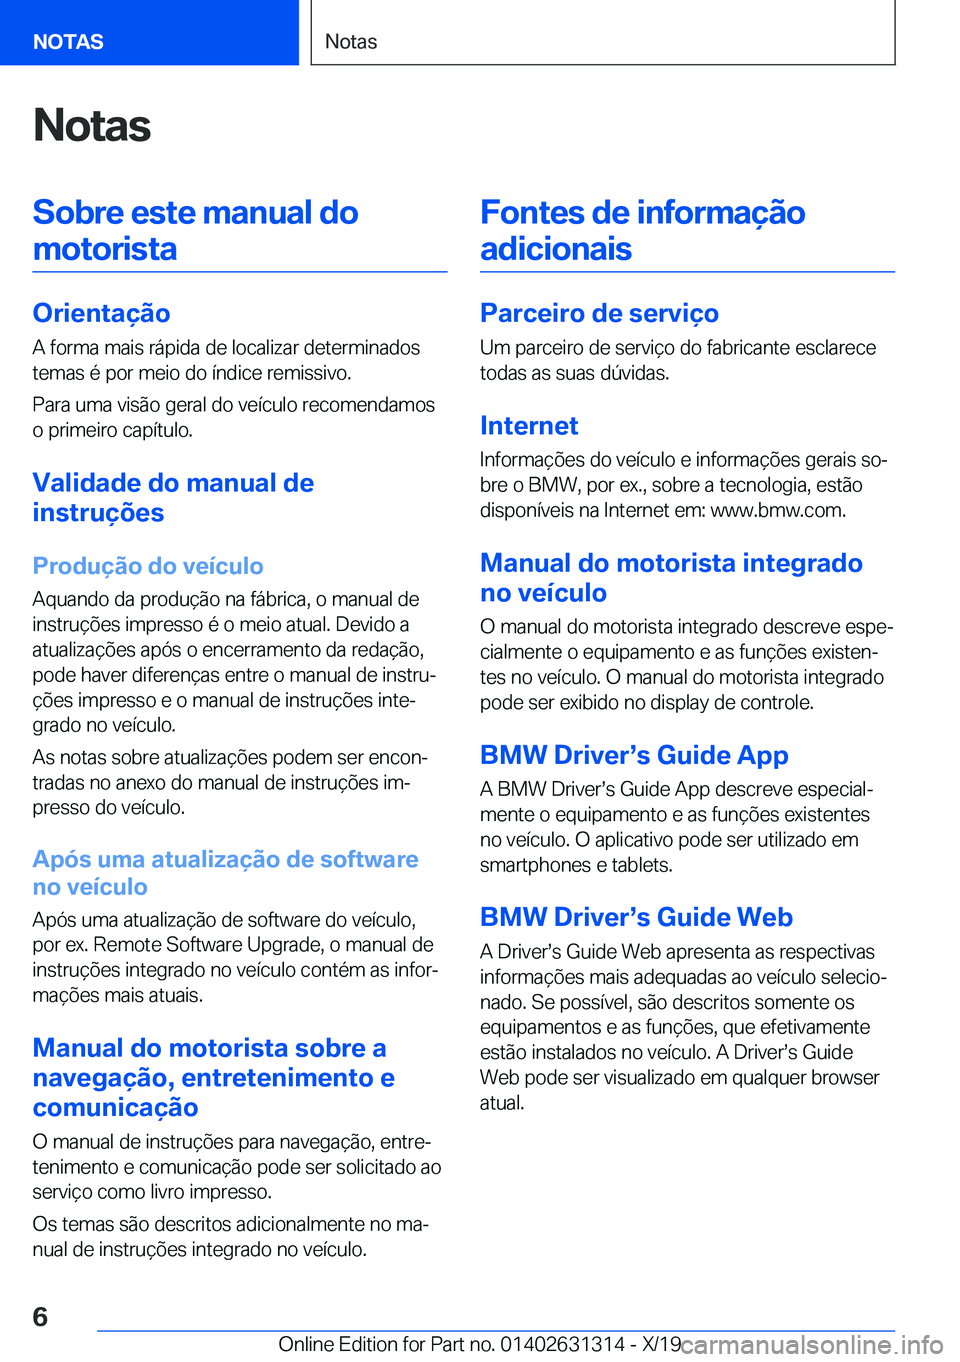 BMW M8 2020  Manual do condutor (in Portuguese) �N�o�t�a�s�S�o�b�r�e��e�s�t�e��m�a�n�u�a�l��d�o�m�o�t�o�r�i�s�t�a
�O�r�i�e�n�t�a�